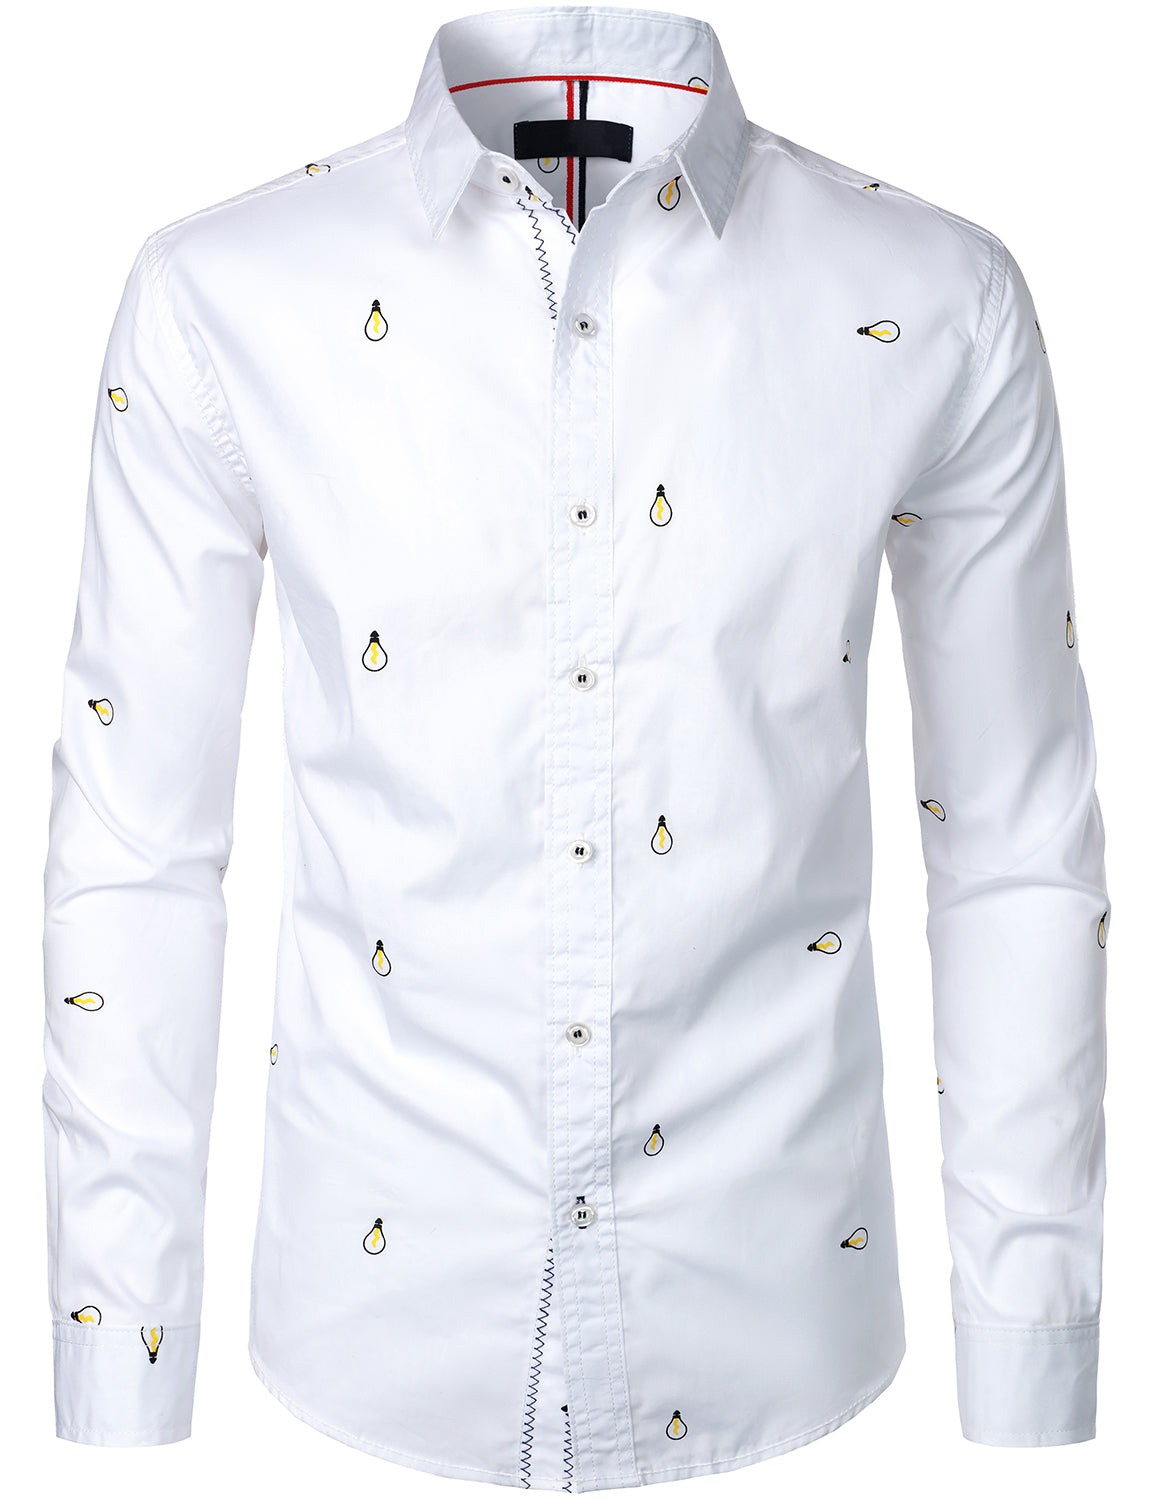 Men's Casual Light Bulb Printed Cotton Long Sleeve Shirt